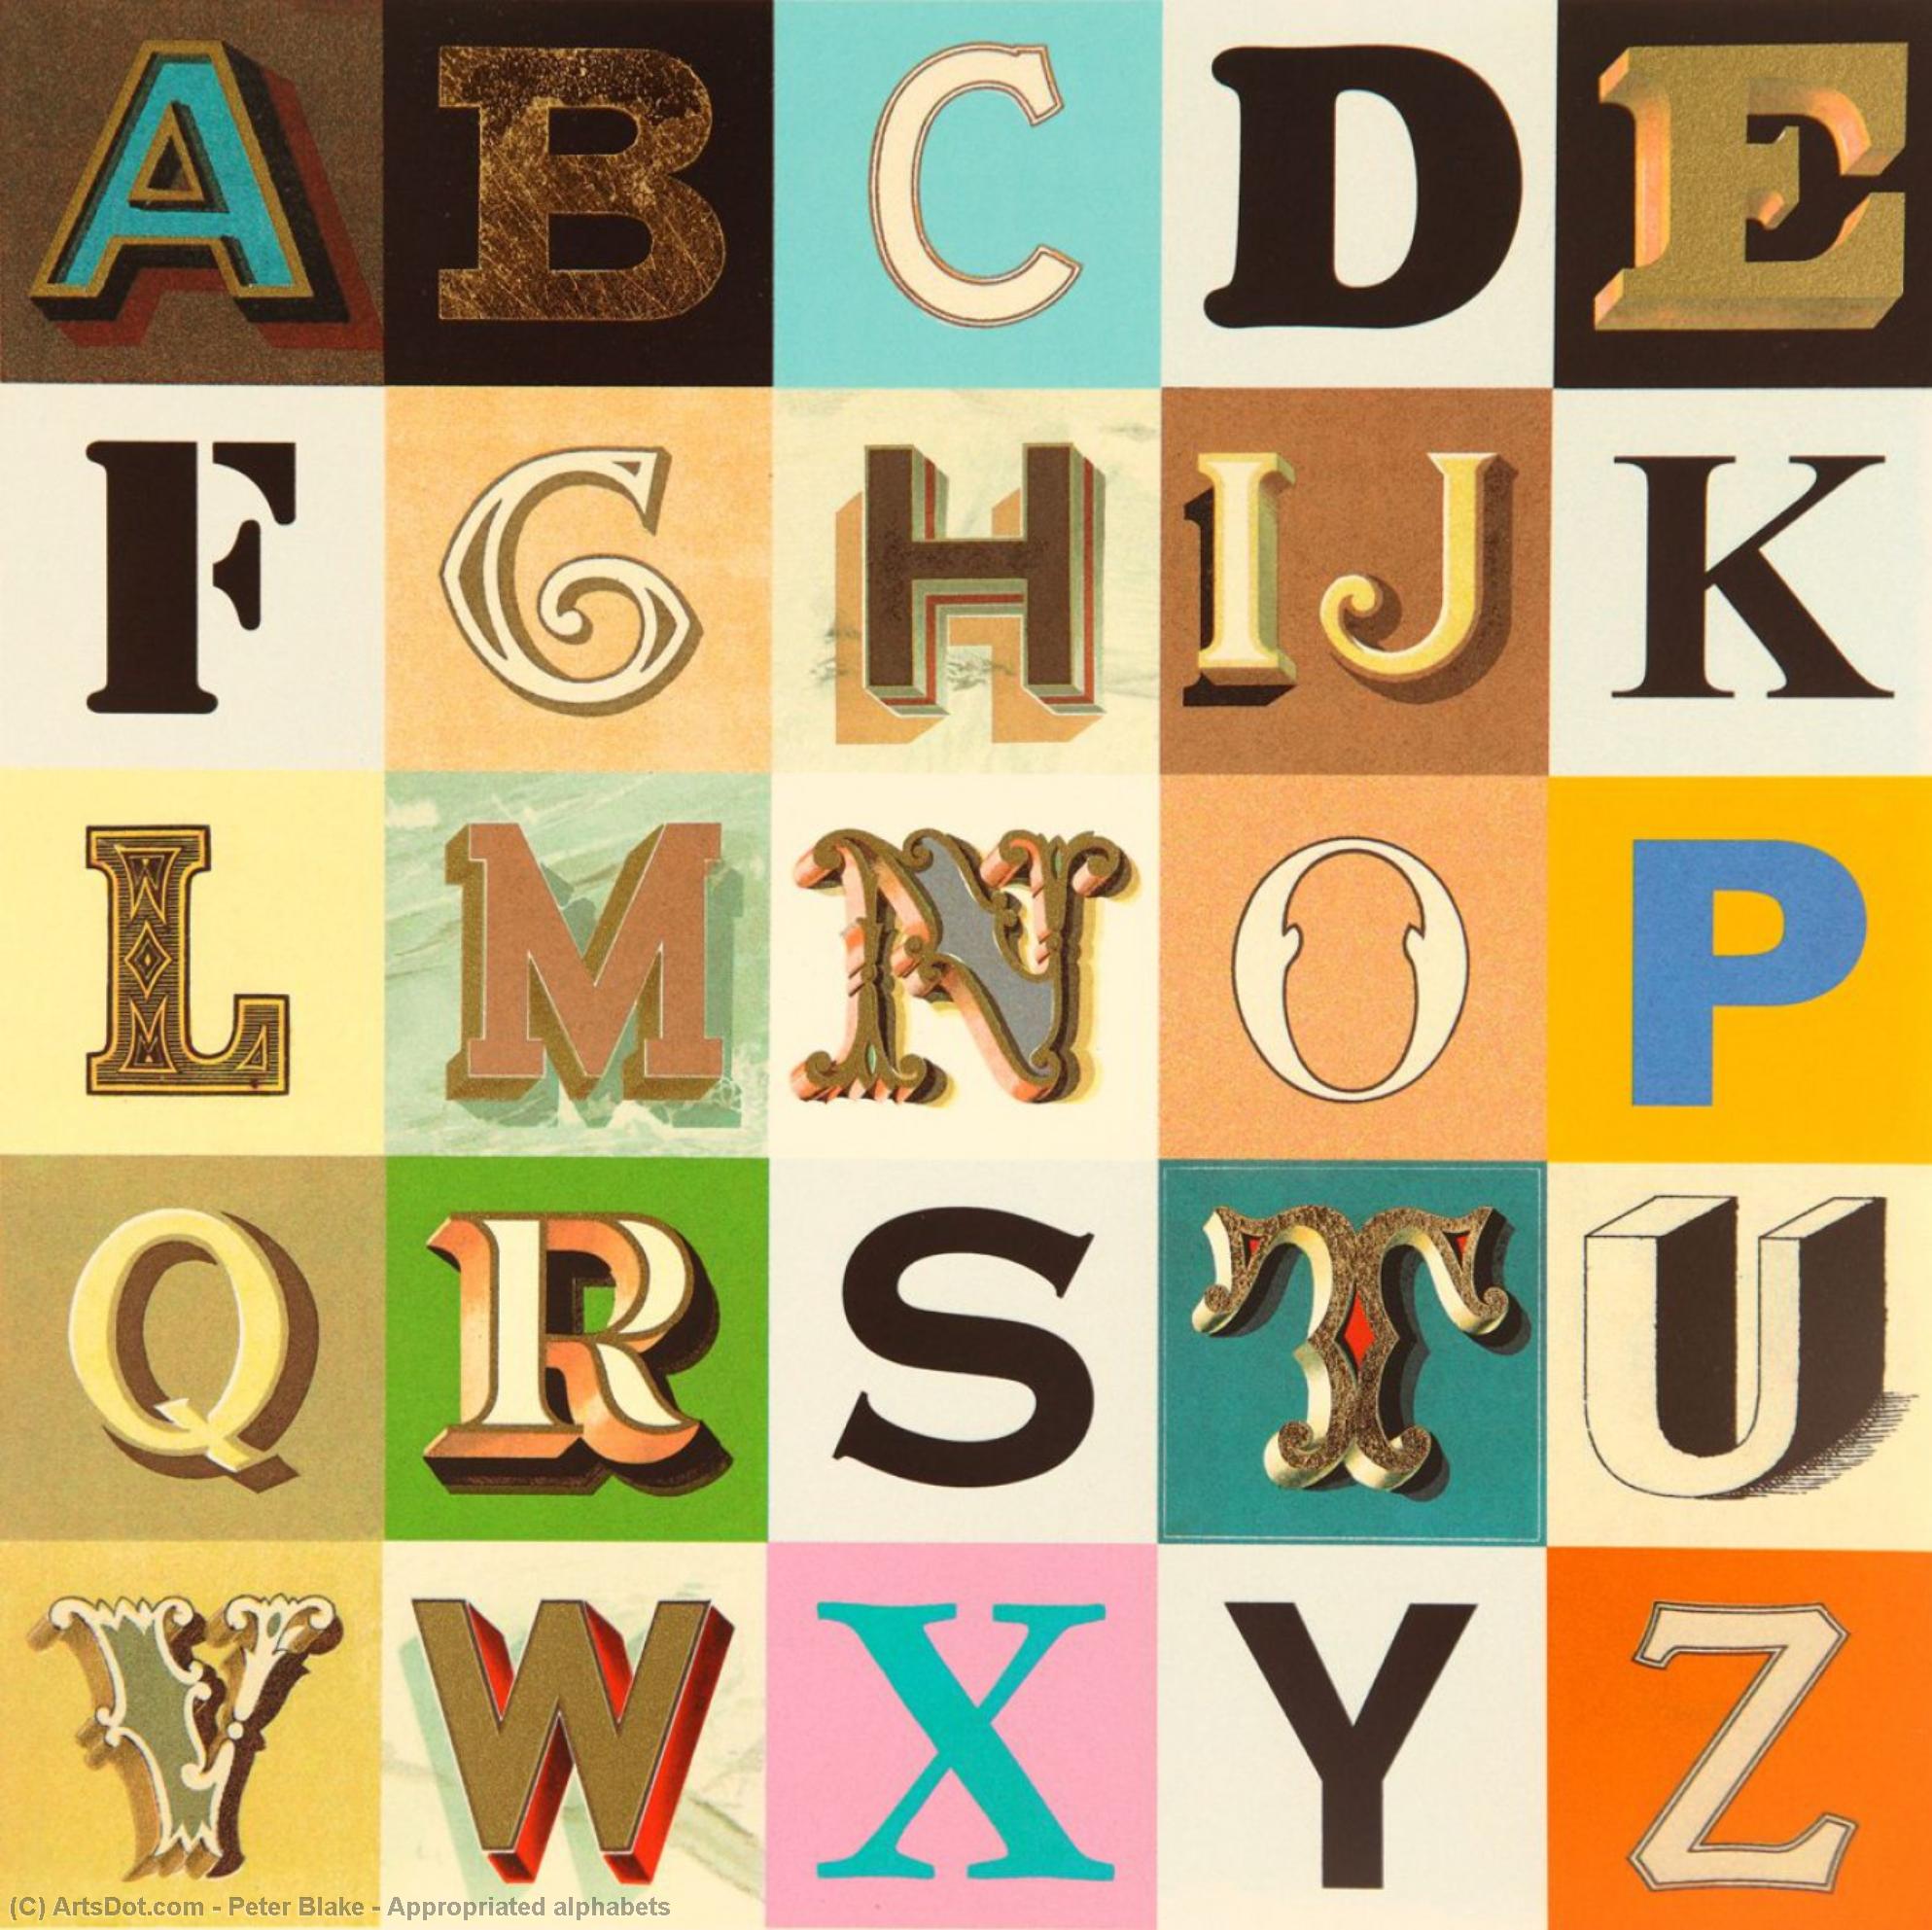 Appropriated alphabets by Peter Blake Peter Blake | ArtsDot.com